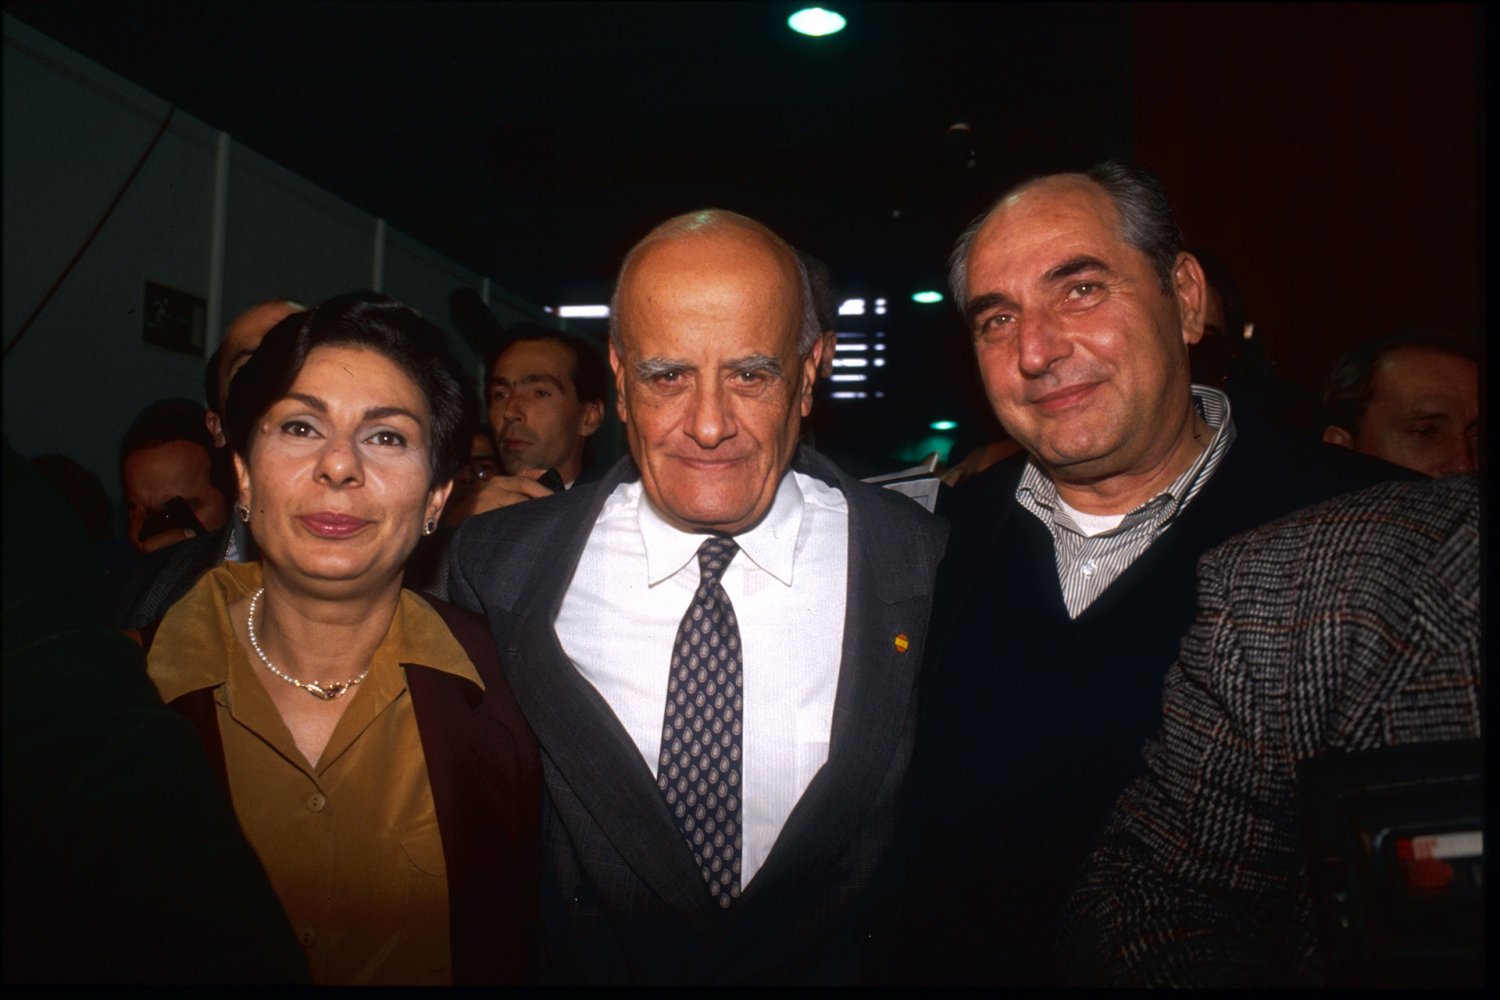 Haidar Abdel-Shafi, Hanan Ashrawi, and Faisal Husseini at the Madrid Peace Conference in Madrid, Spain, October 29, 1991.